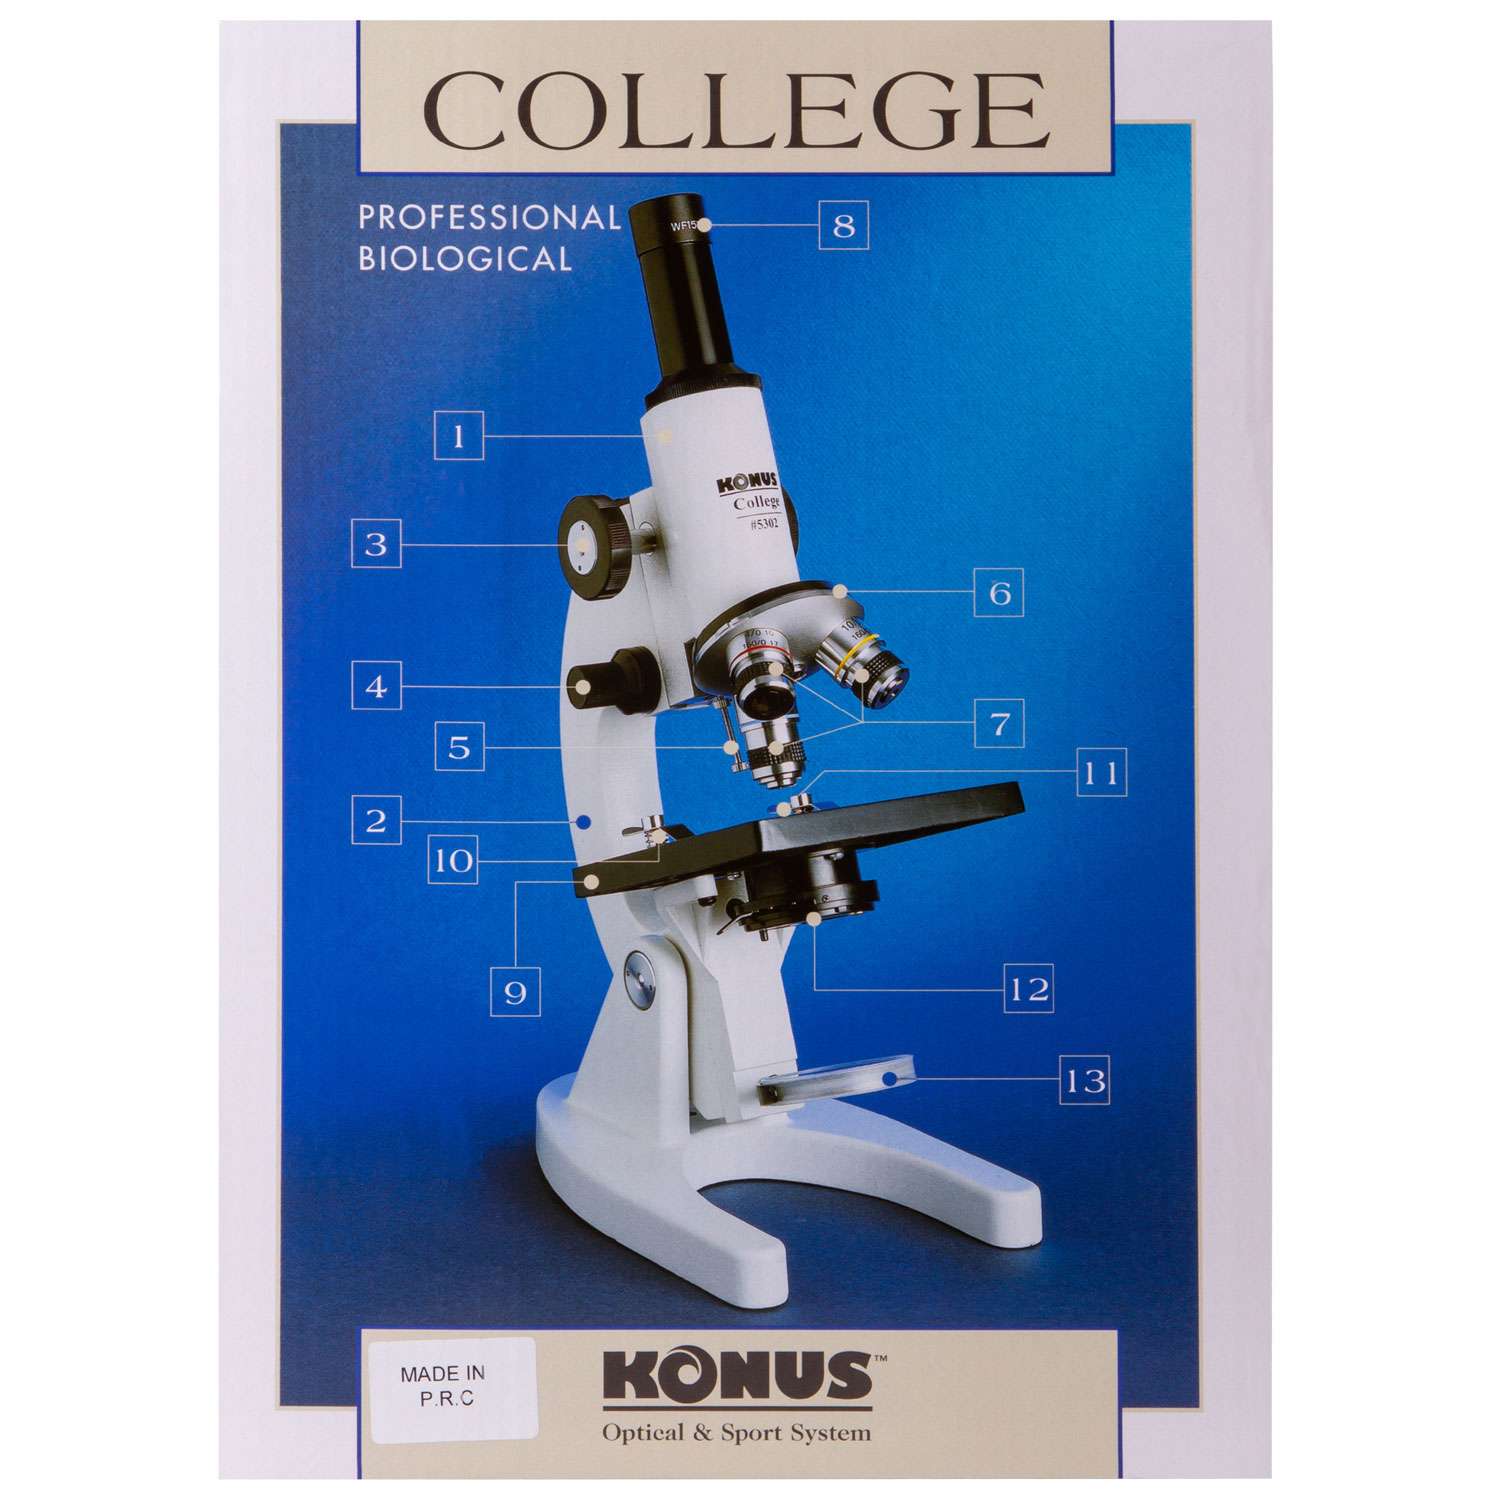 Микроскоп Konus College 600x - фото 14